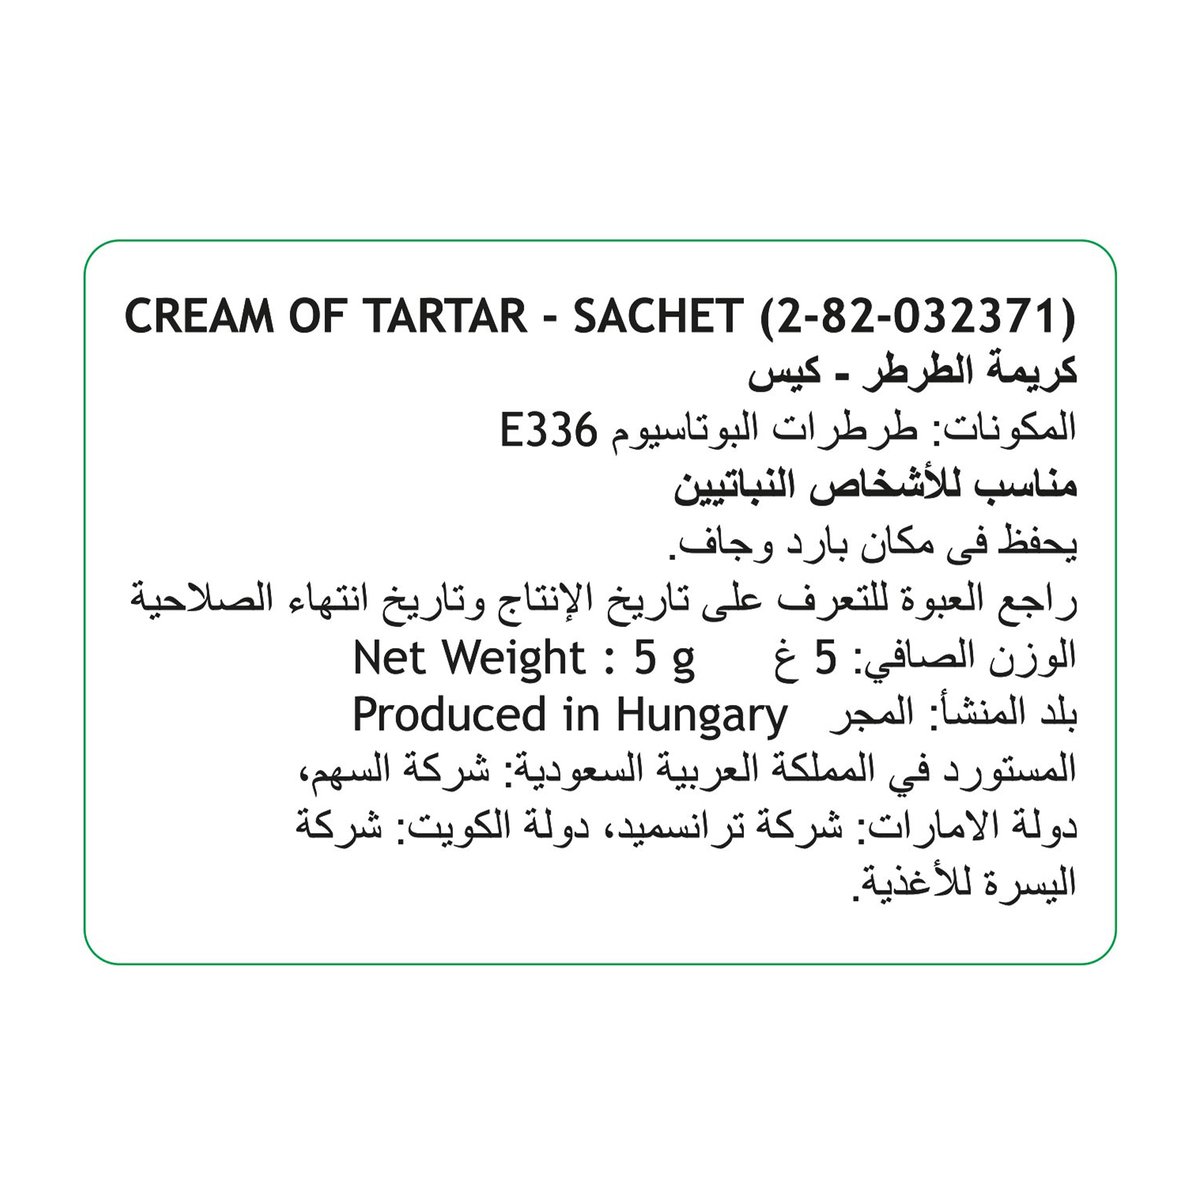 Oetker Cream Of Tartar 6 x 5 g